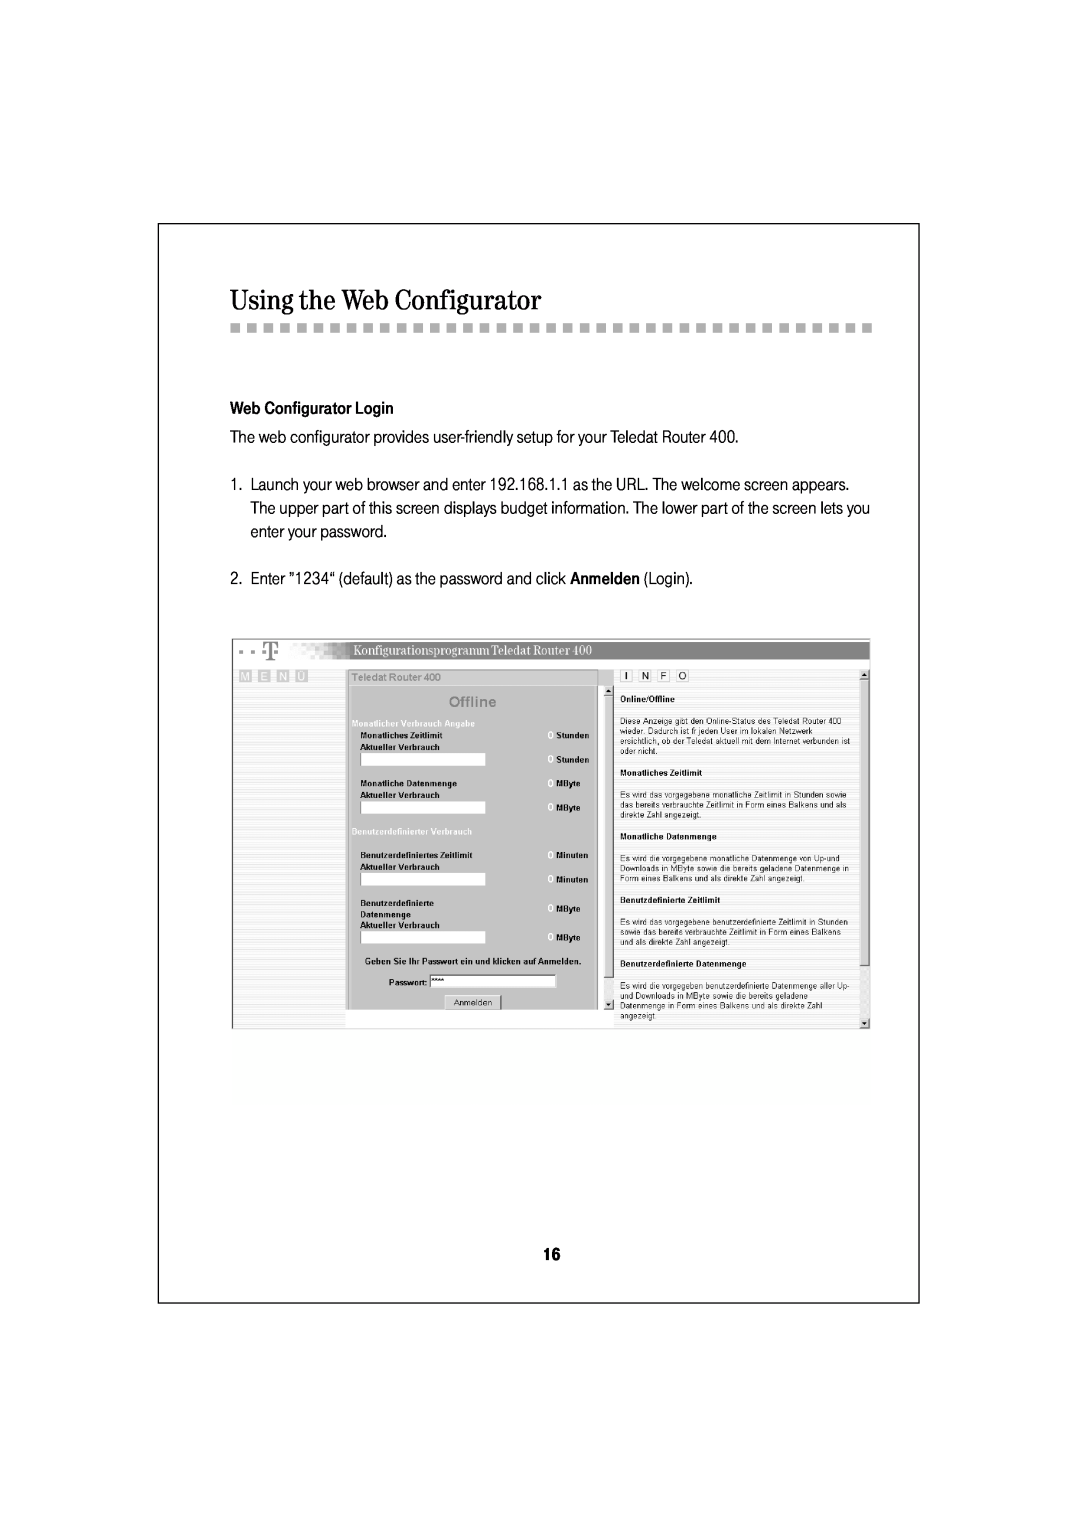 Deutsche Telekom 400 quick start Using the Web Configurator, Web Configurator Login 